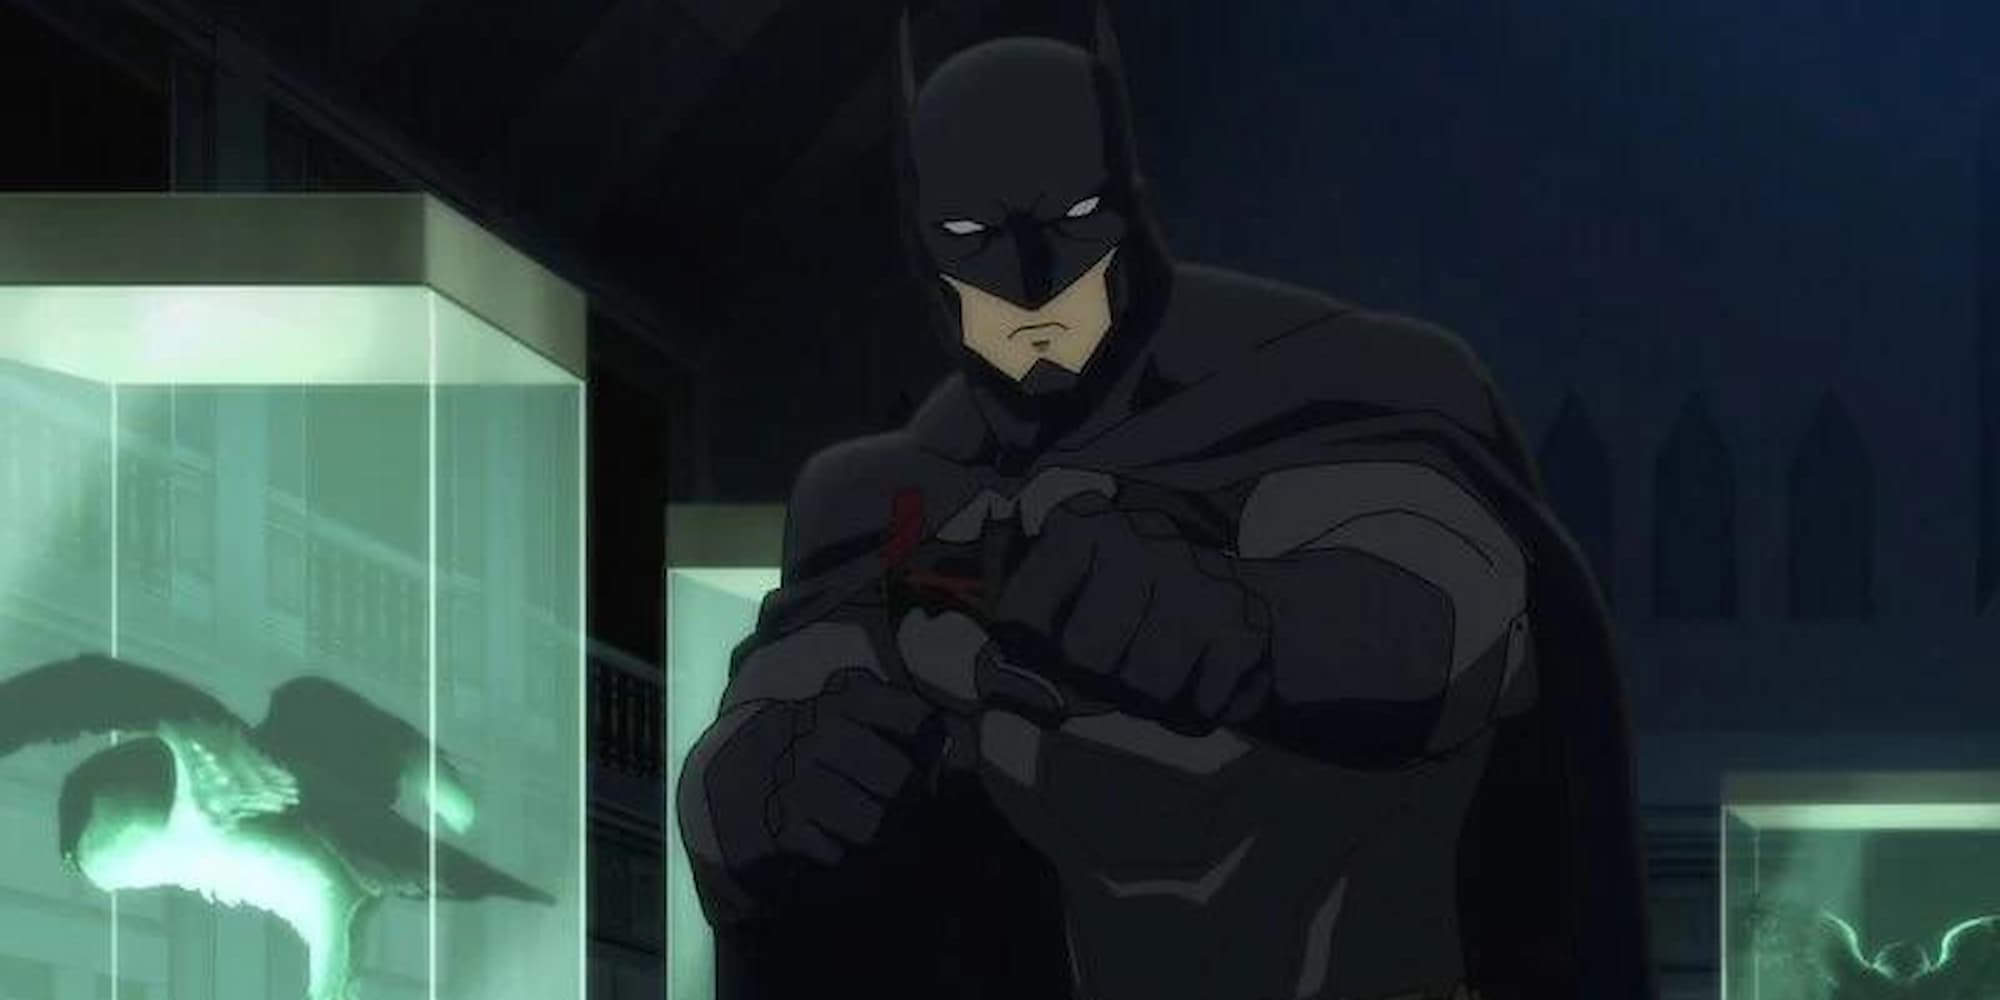 James O'Mara as Batman